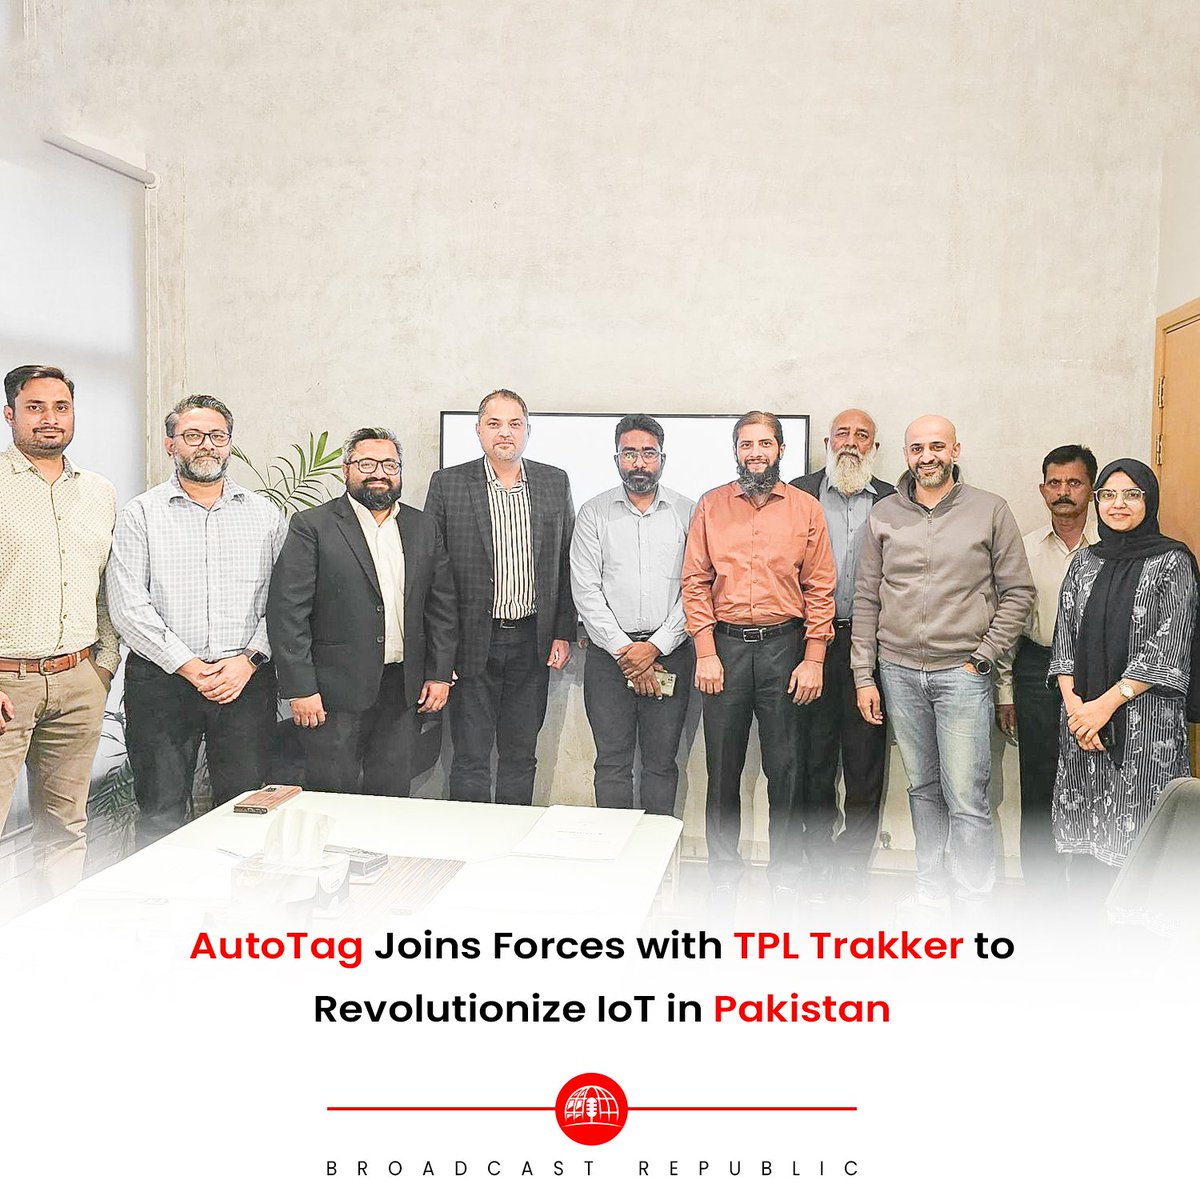 AutoTag, a prominent tracker manufacturing company, has recently partnered with TPL Trakker Ltd., a leading IoT company in Pakistan. 

#BroadcastRepublic #AutoTag #TPLTrakker #IoTInnovation #Partnership #Pakistan #CollaborationInTech #TechNews